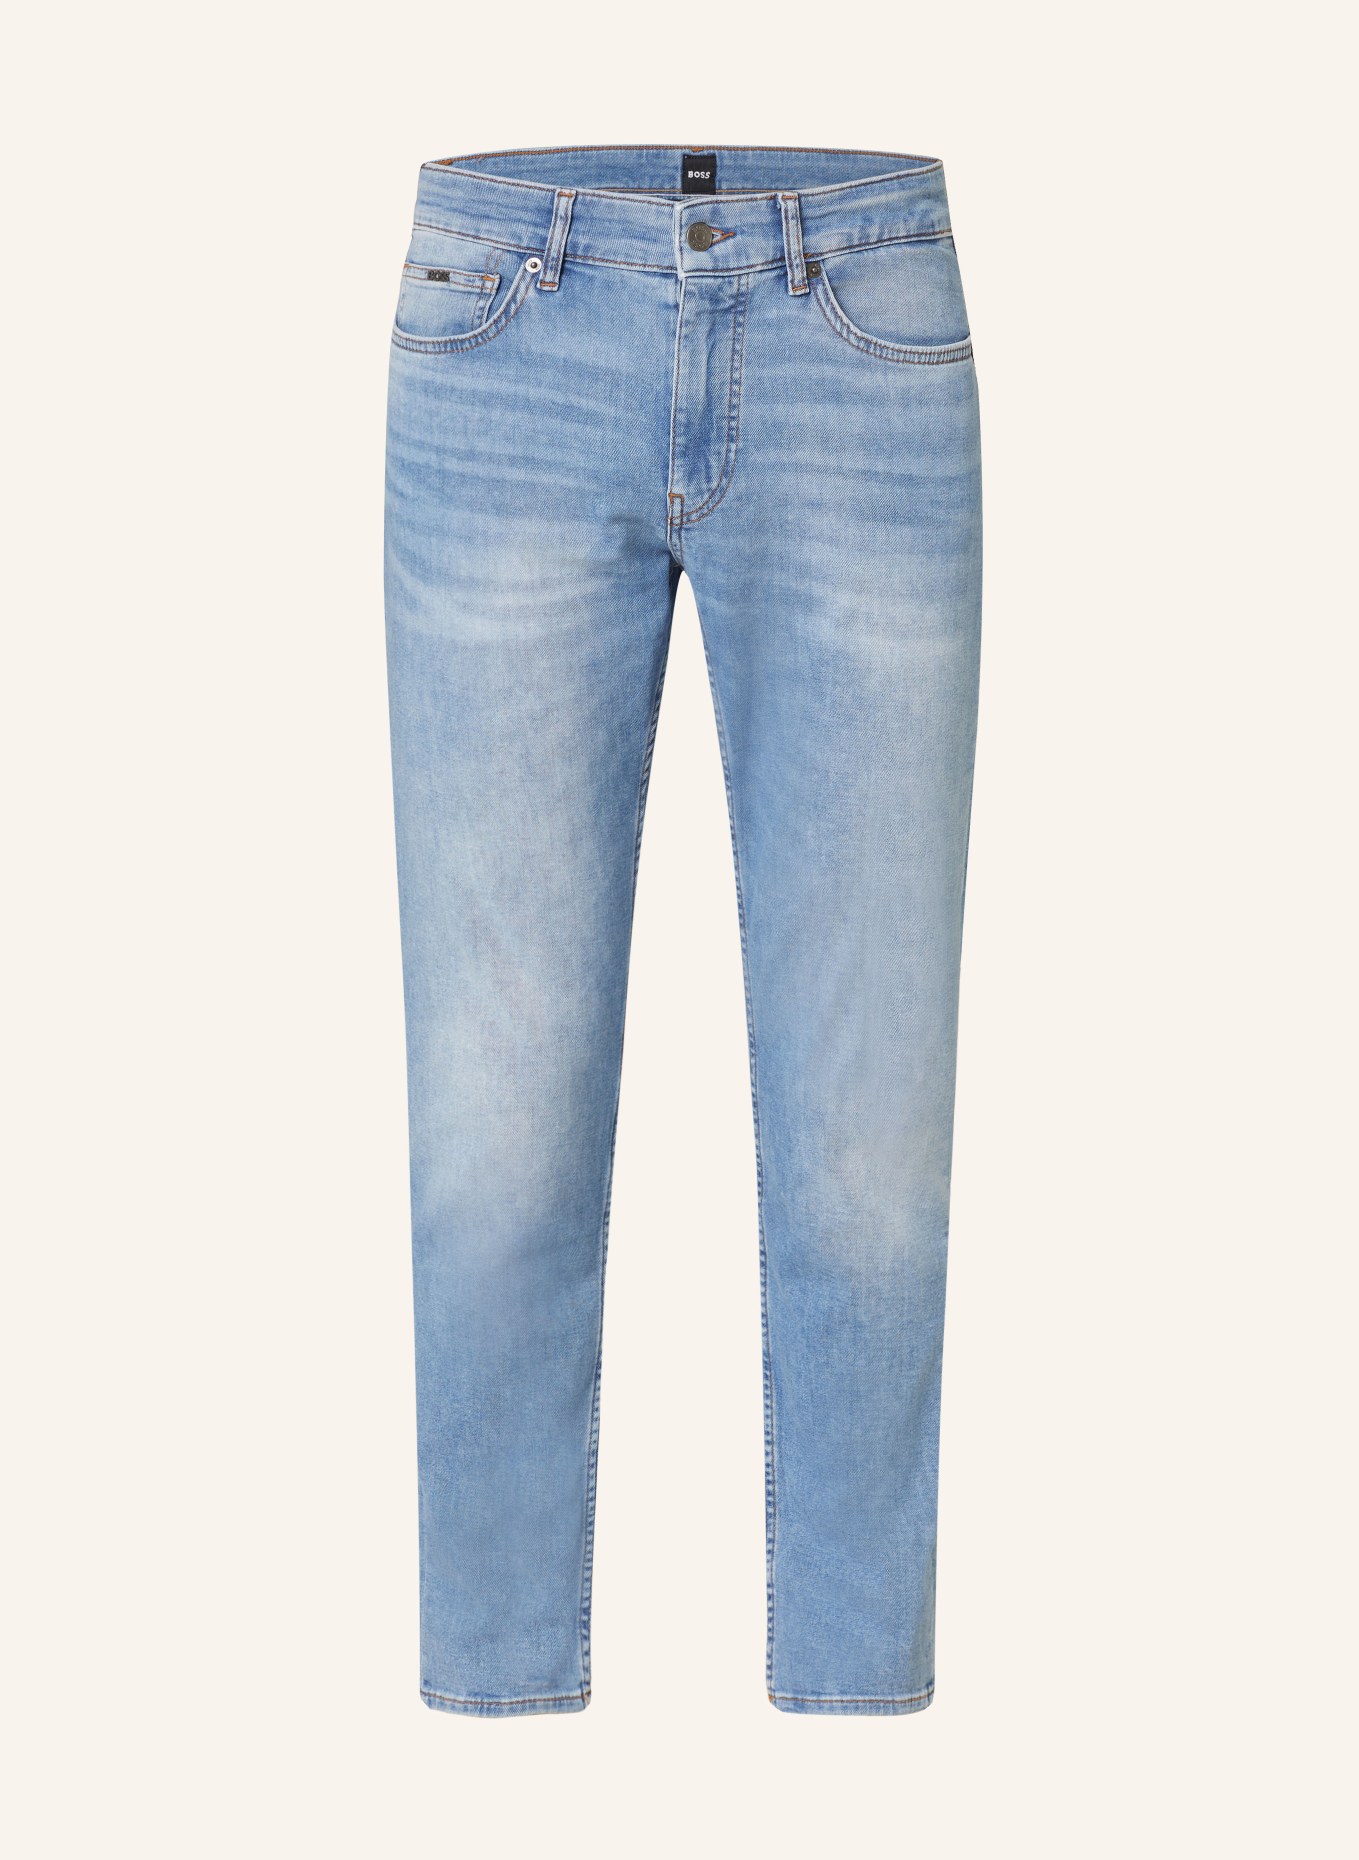 BOSS Jeans DELANO Slim Tapered Fit, Farbe: 425 MEDIUM BLUE (Bild 1)